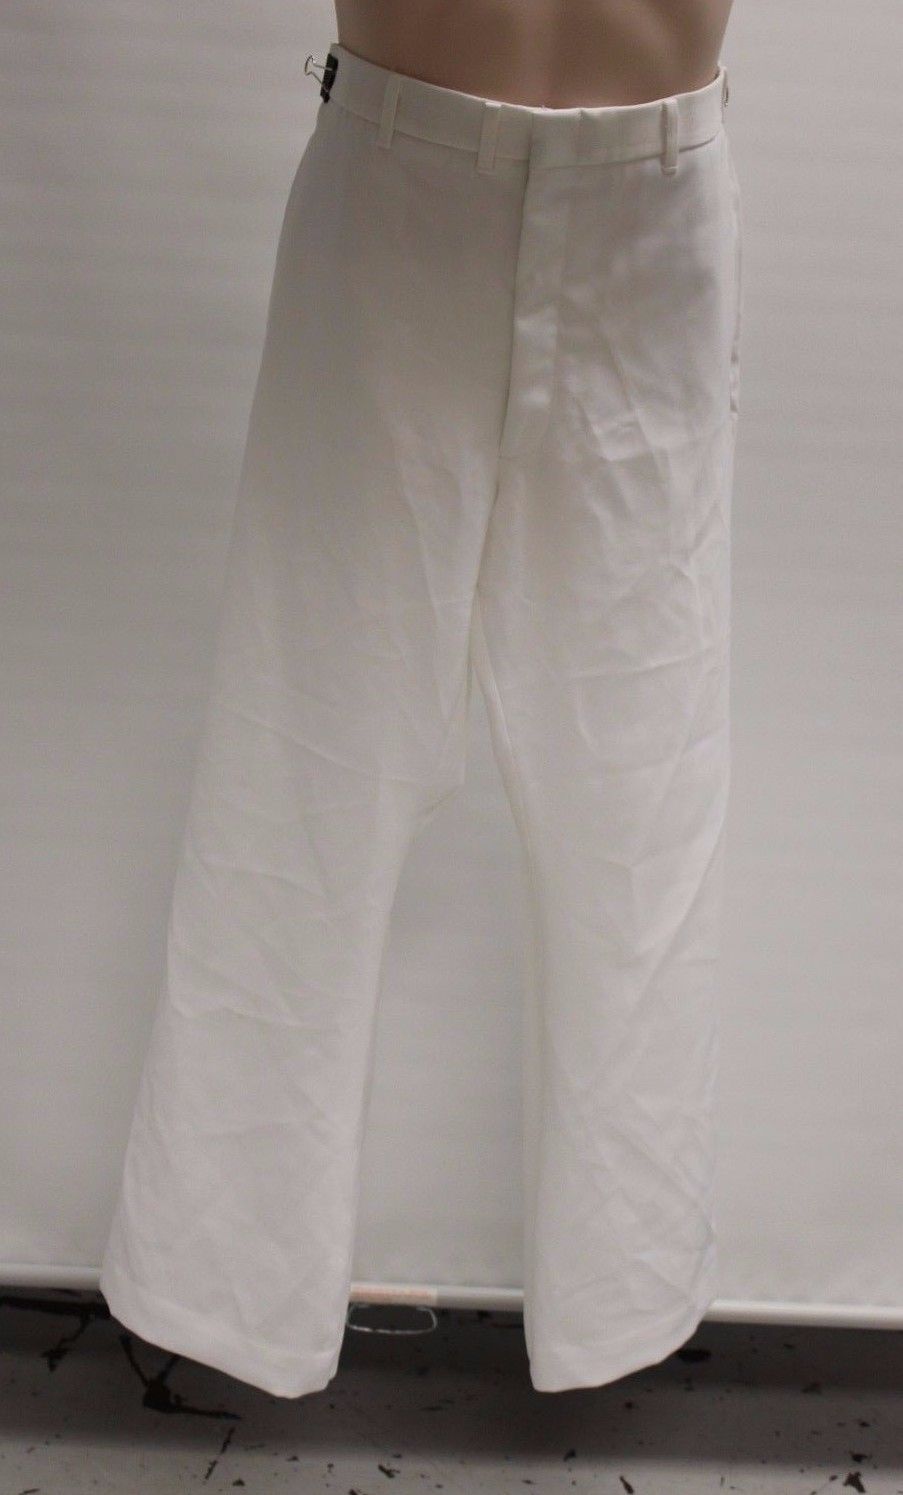 US Military Men's White Service Dress Trousers, Size: 35L, NSN 8405-01-076-0749